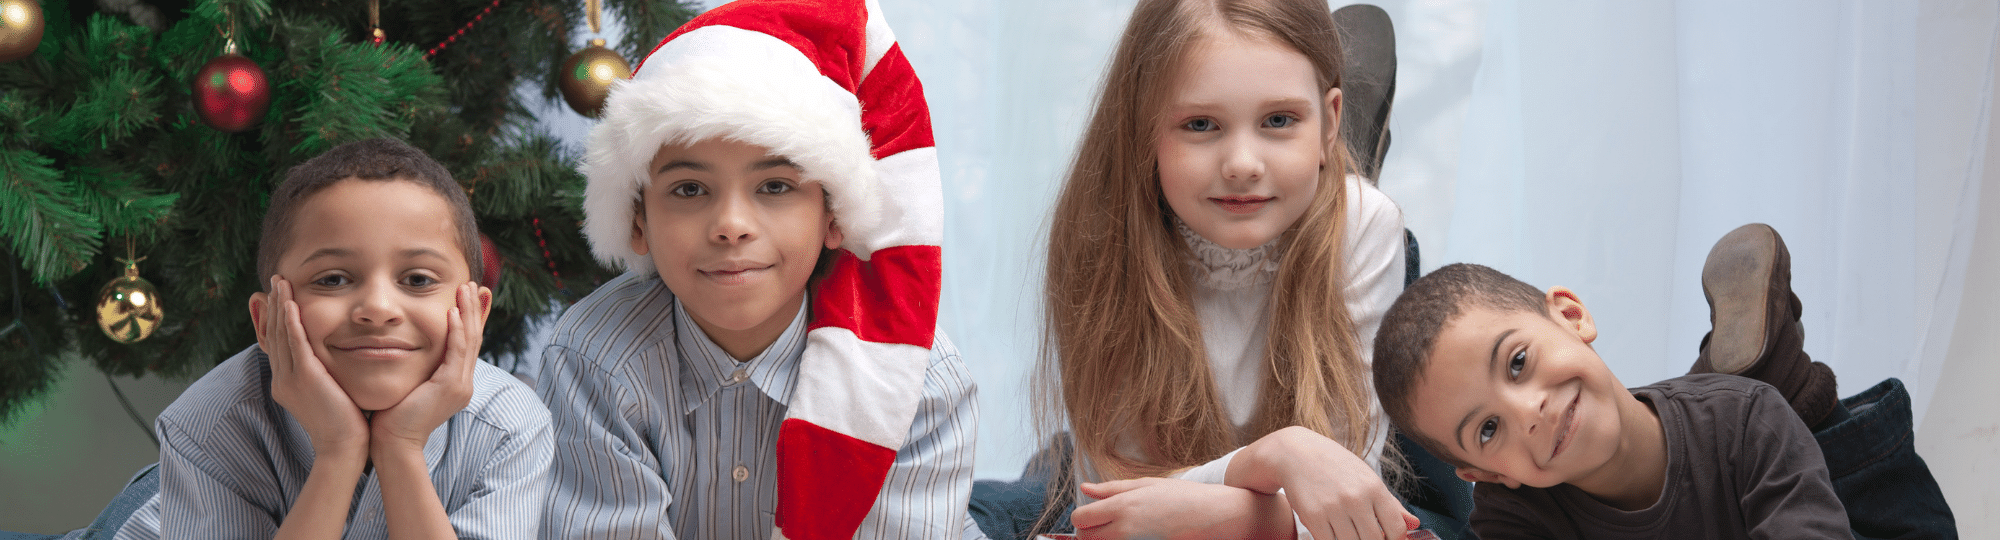 children near a Christmas tree